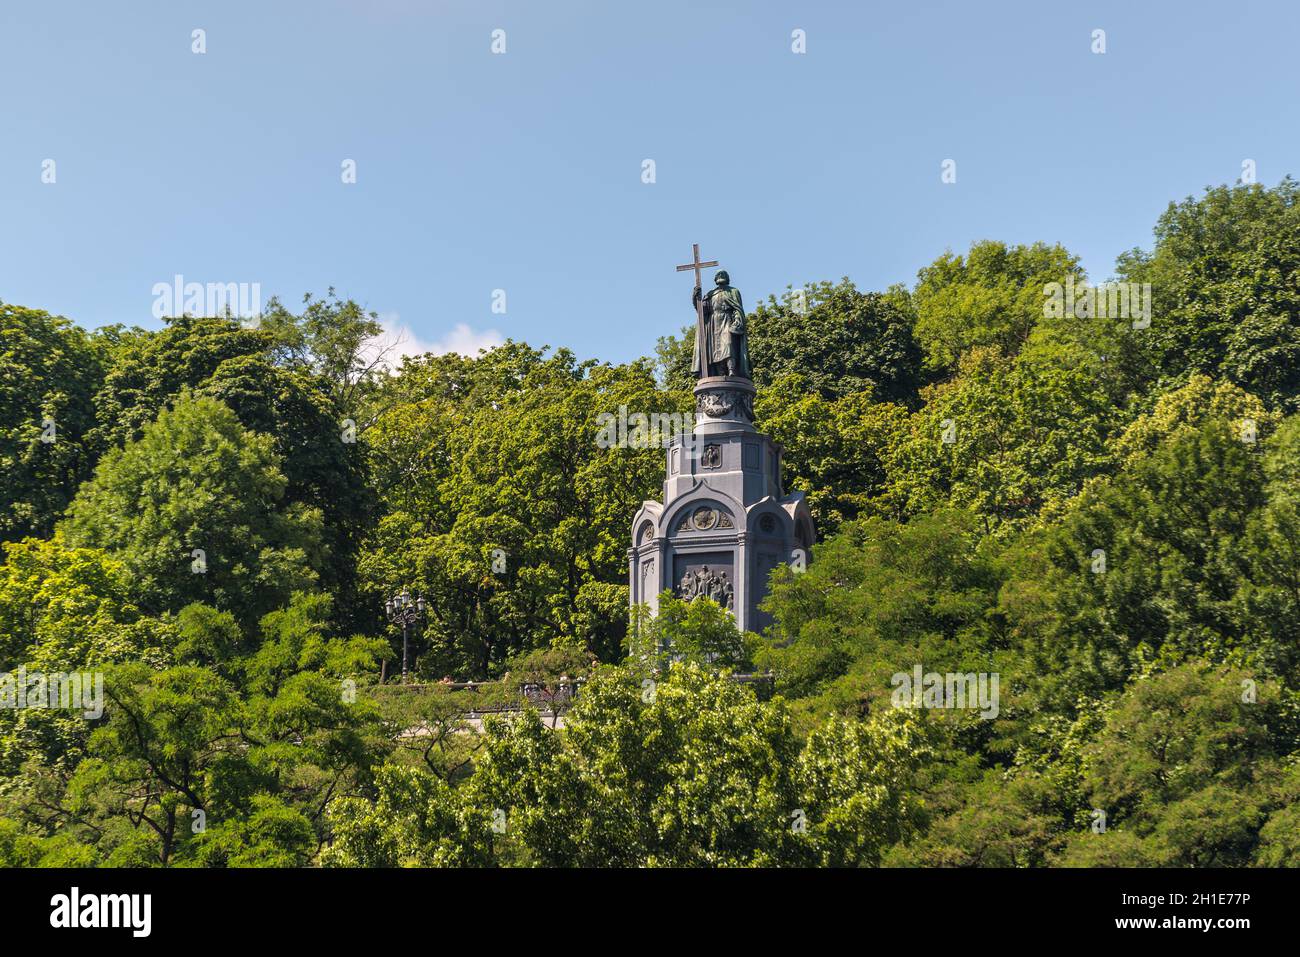 Kyiv, Ukraine - July 13, 2019: View of the monument of Saint Volodymyr, the Baptist of Kyivska Rus, built in 1853 (Vladimir the Baptist). Stock Photo